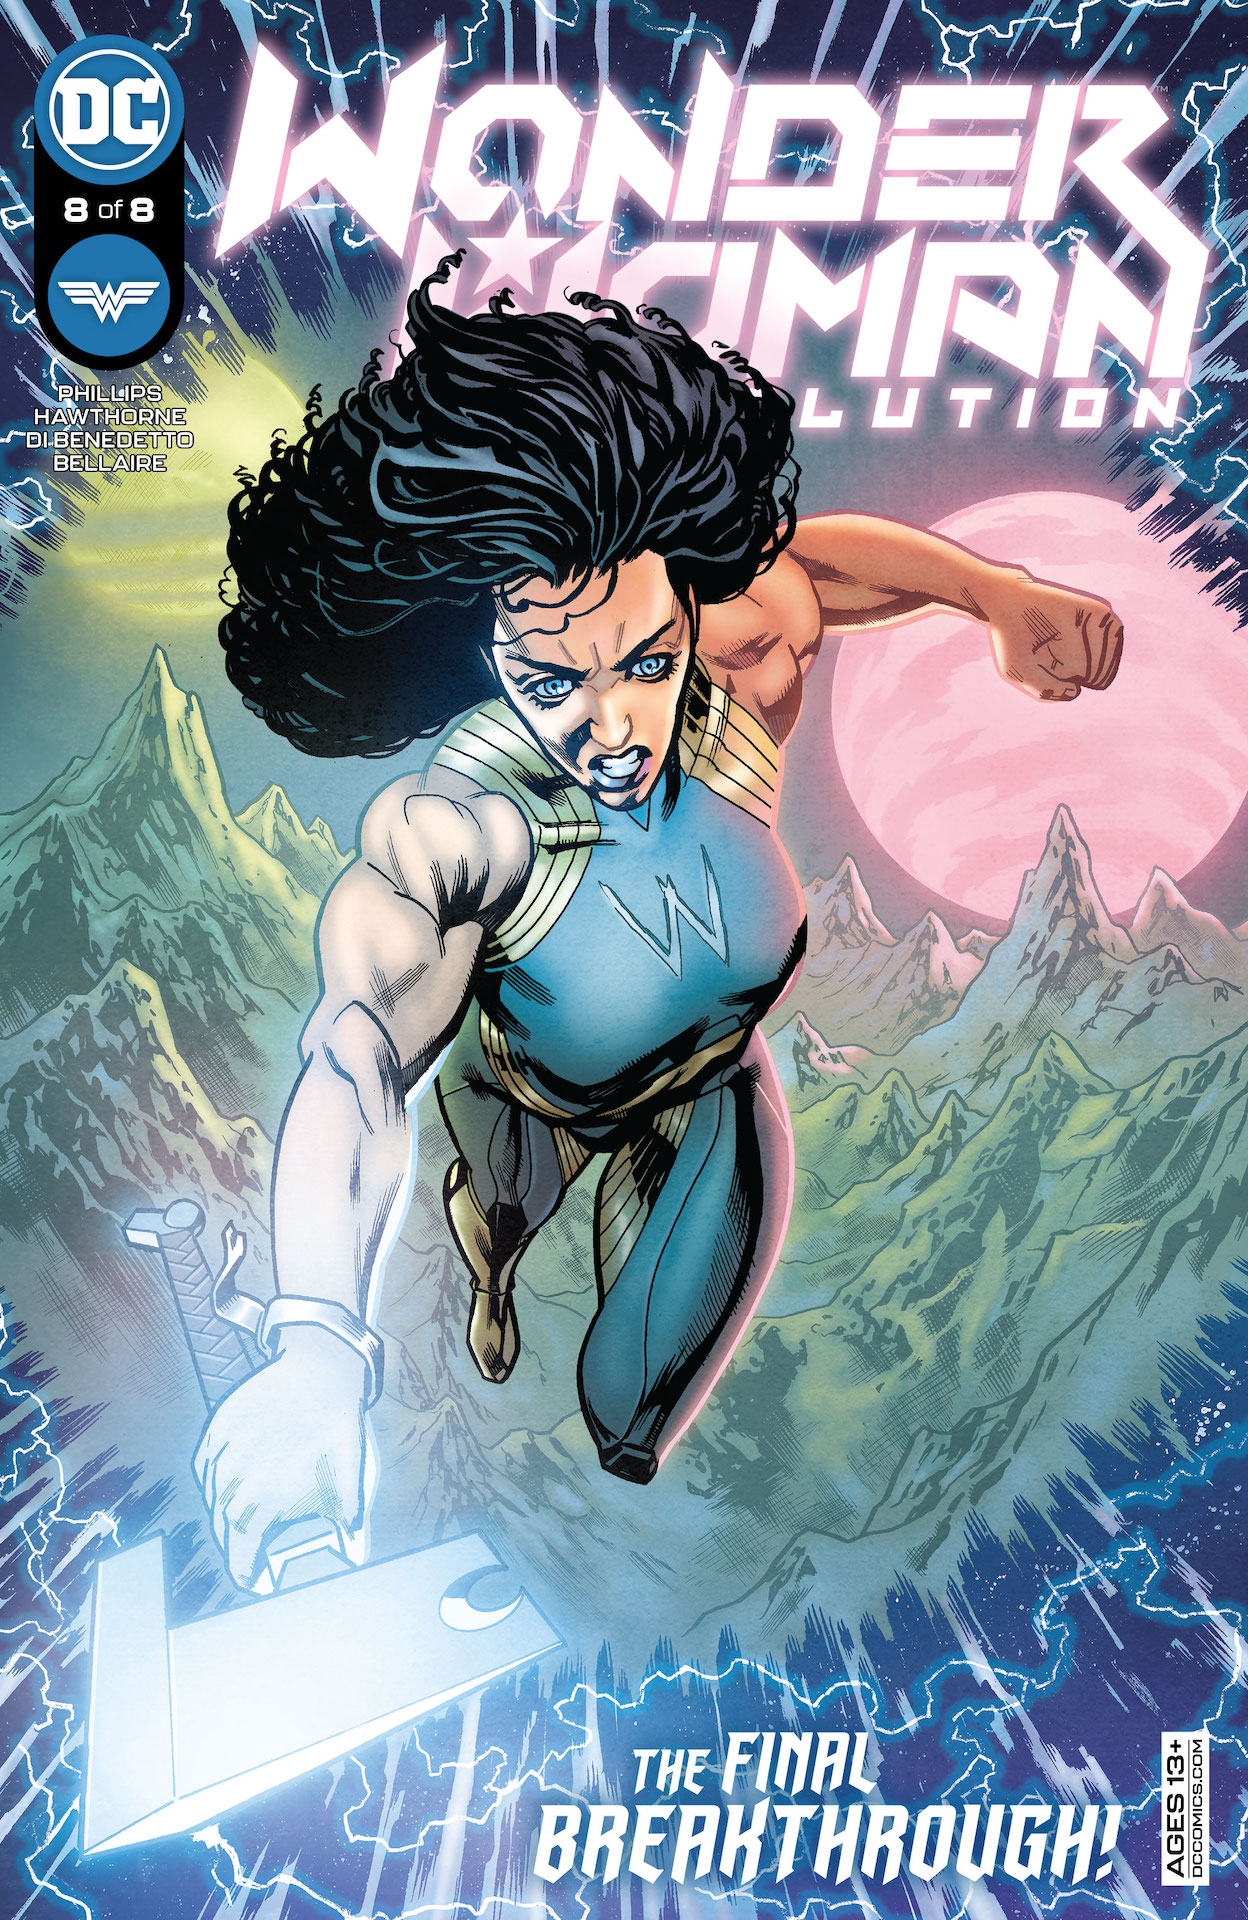 DC Preview: Wonder Woman: Evolution #8